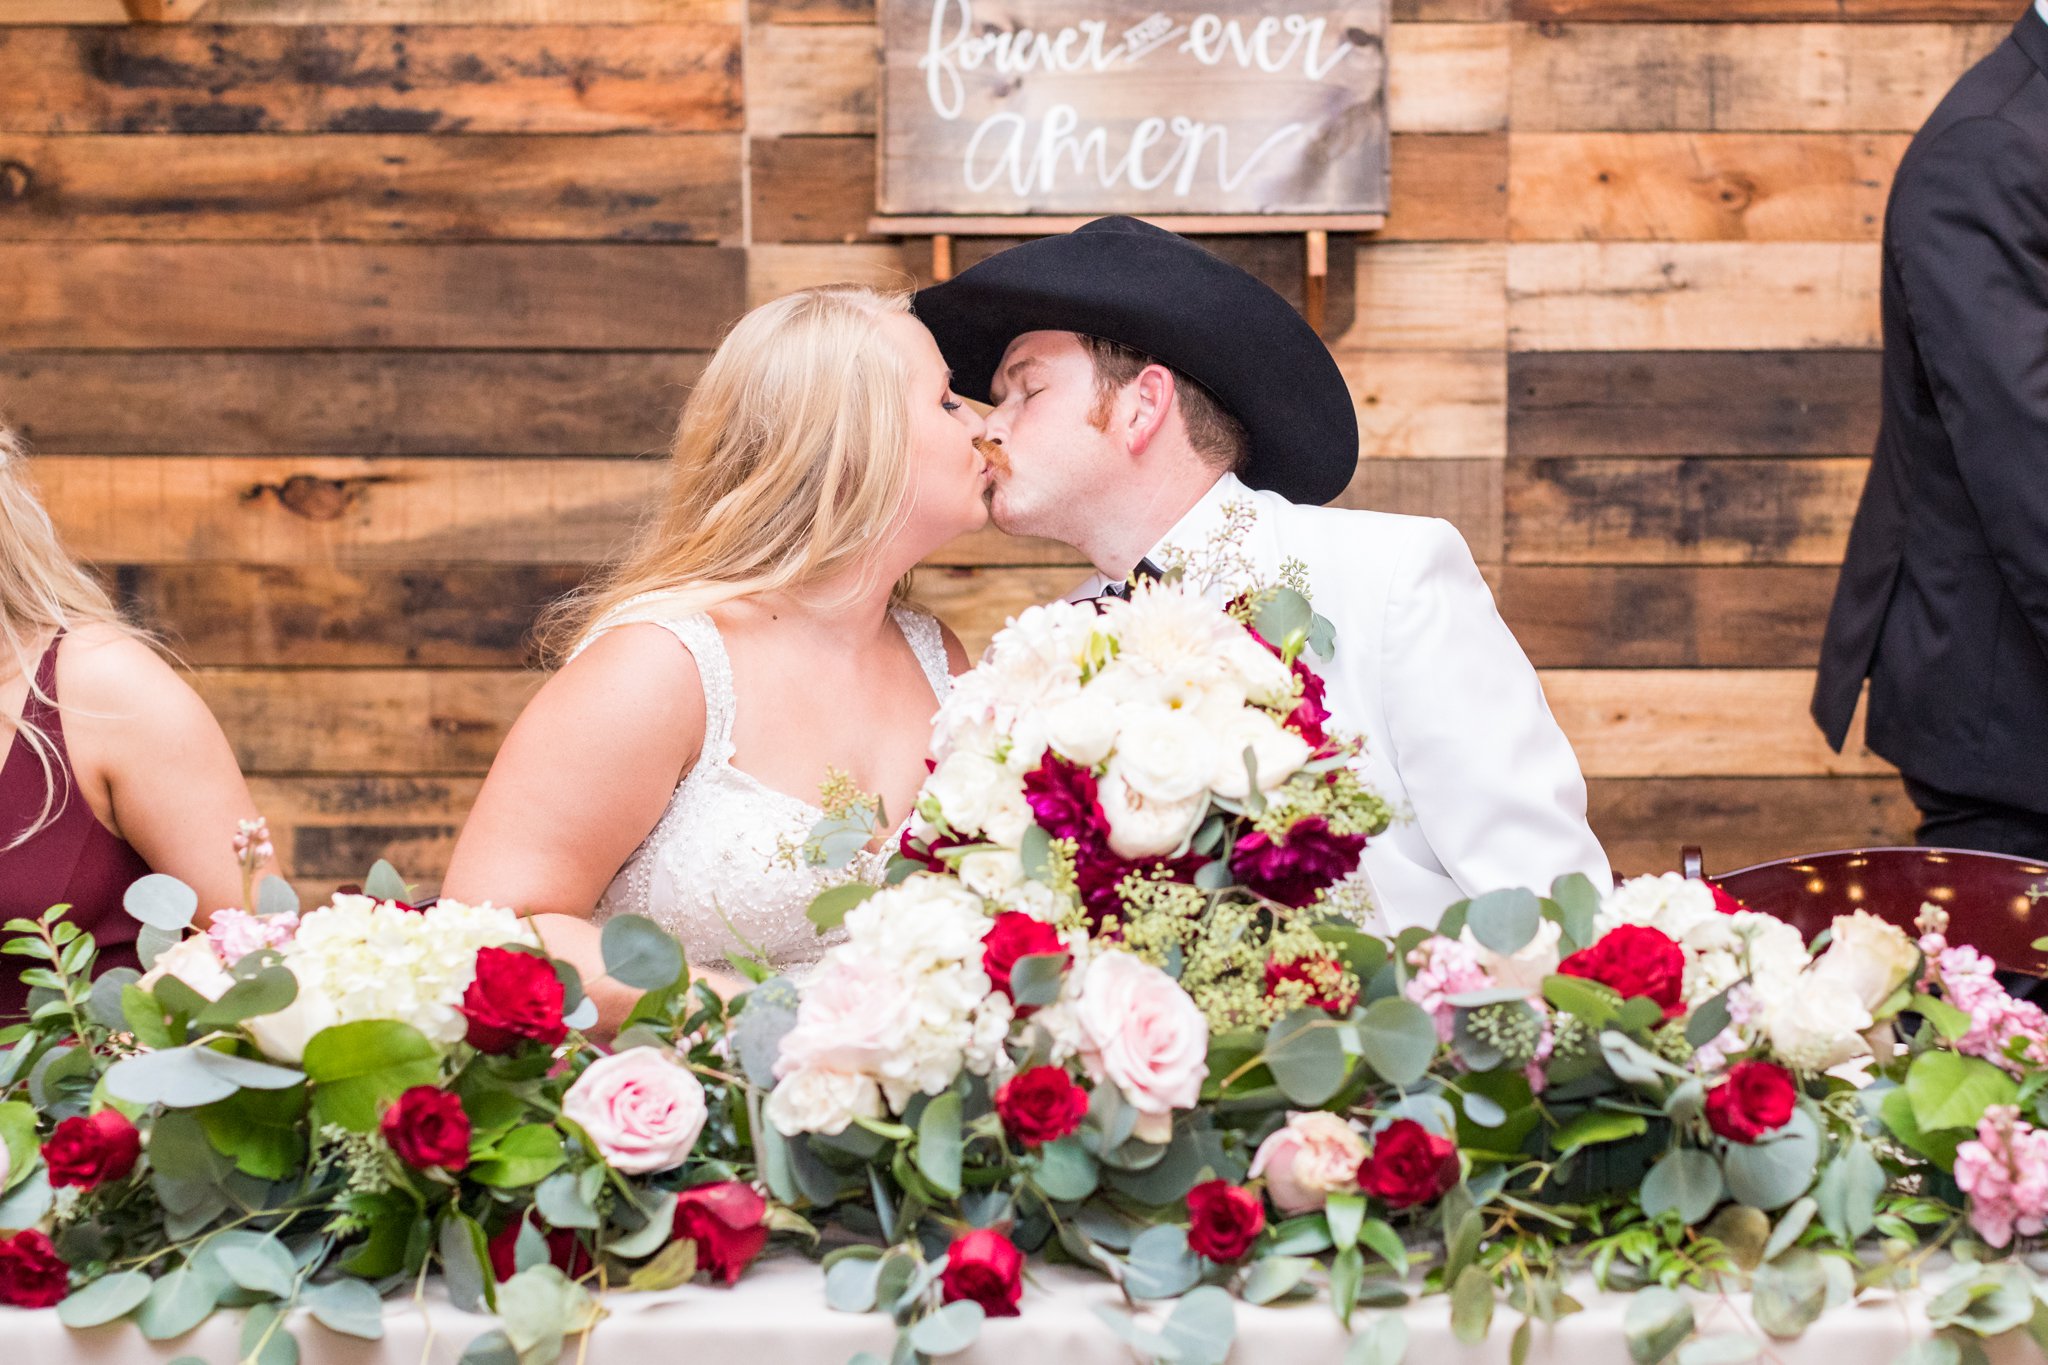 A Burgundy and Blush Wedding at Phoenician Ballroom in San Antonio, TX by Dawn Elizabeth Studios, San Antonio Wedding Photographer